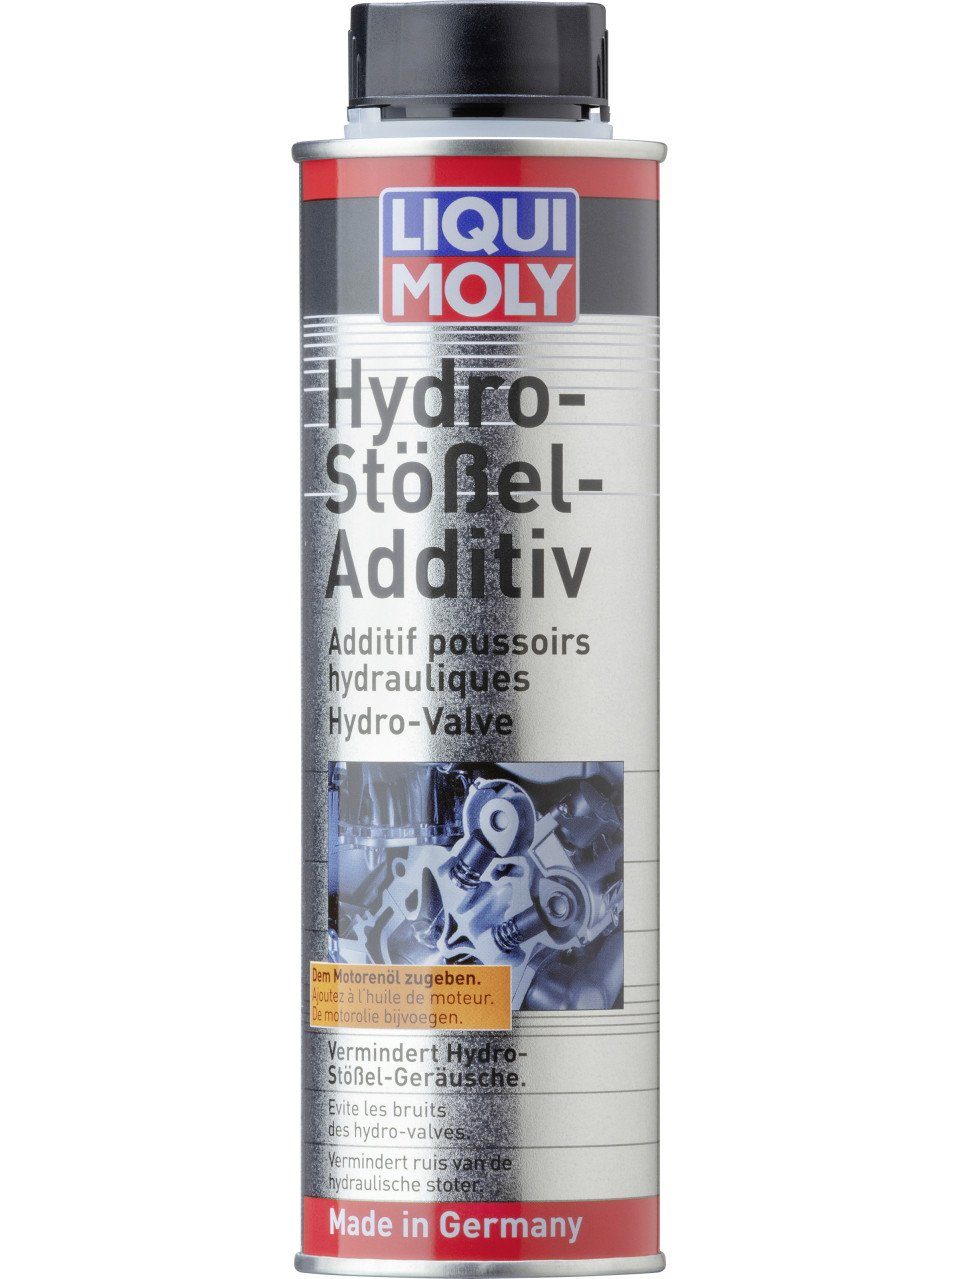 Liqui 300 Hydro-Stößel-Additiv Moly Moly Liqui ml Diesel-Additiv